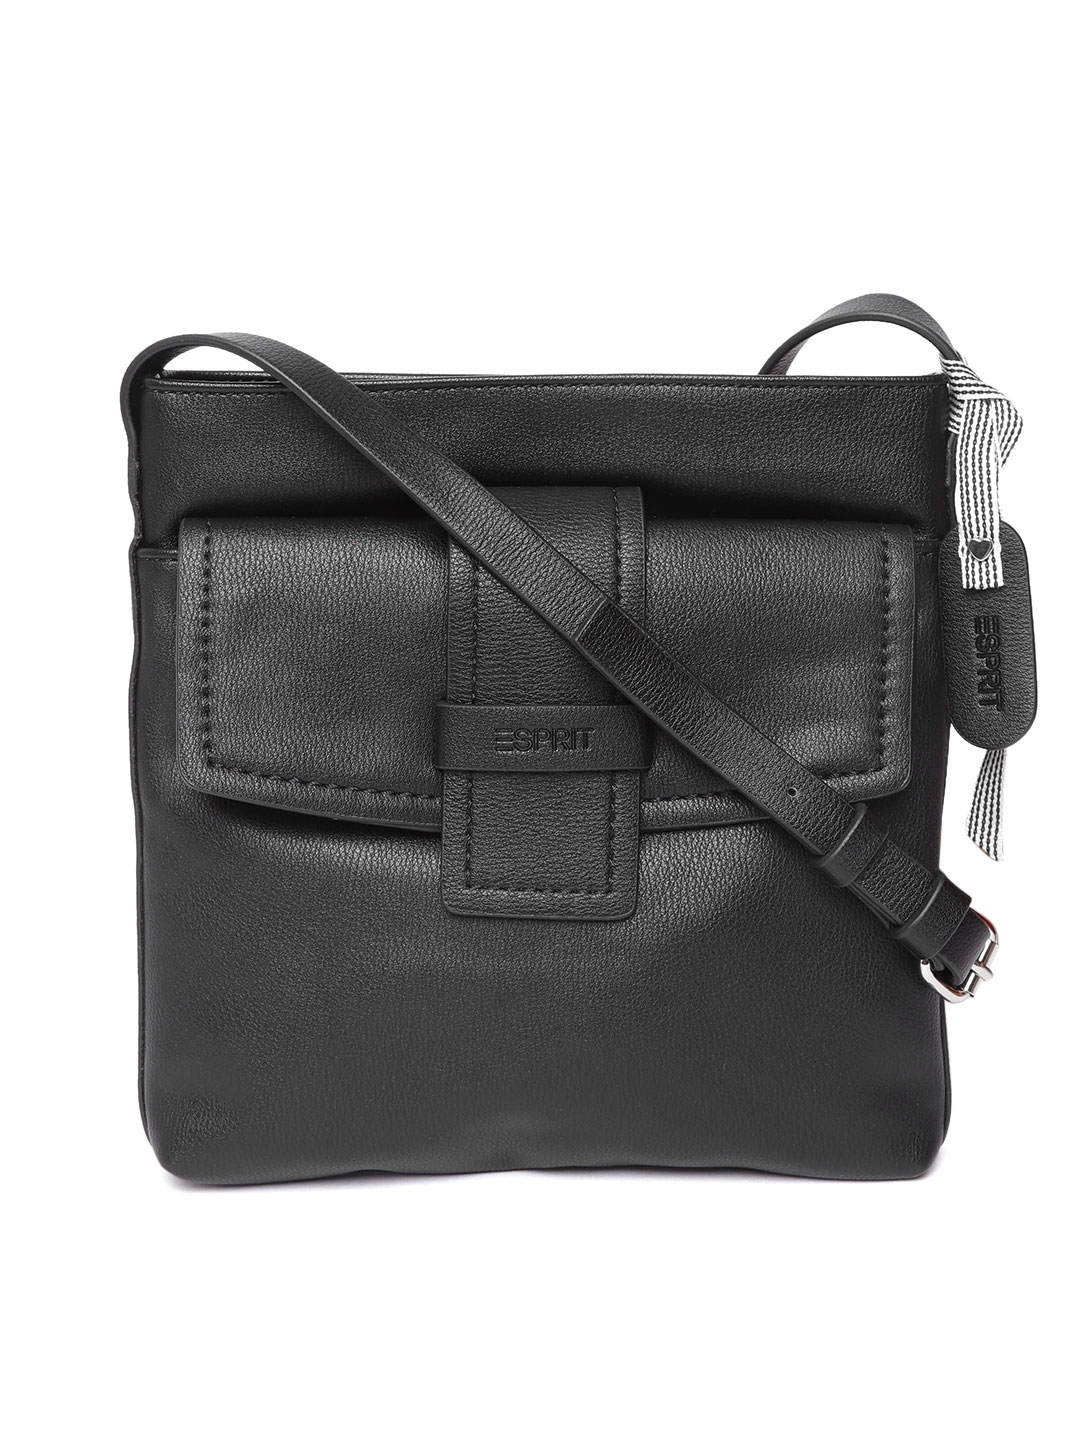 Buy ESPRIT Black Solid Sling Bag - Handbags for Women 9306889 | Myntra